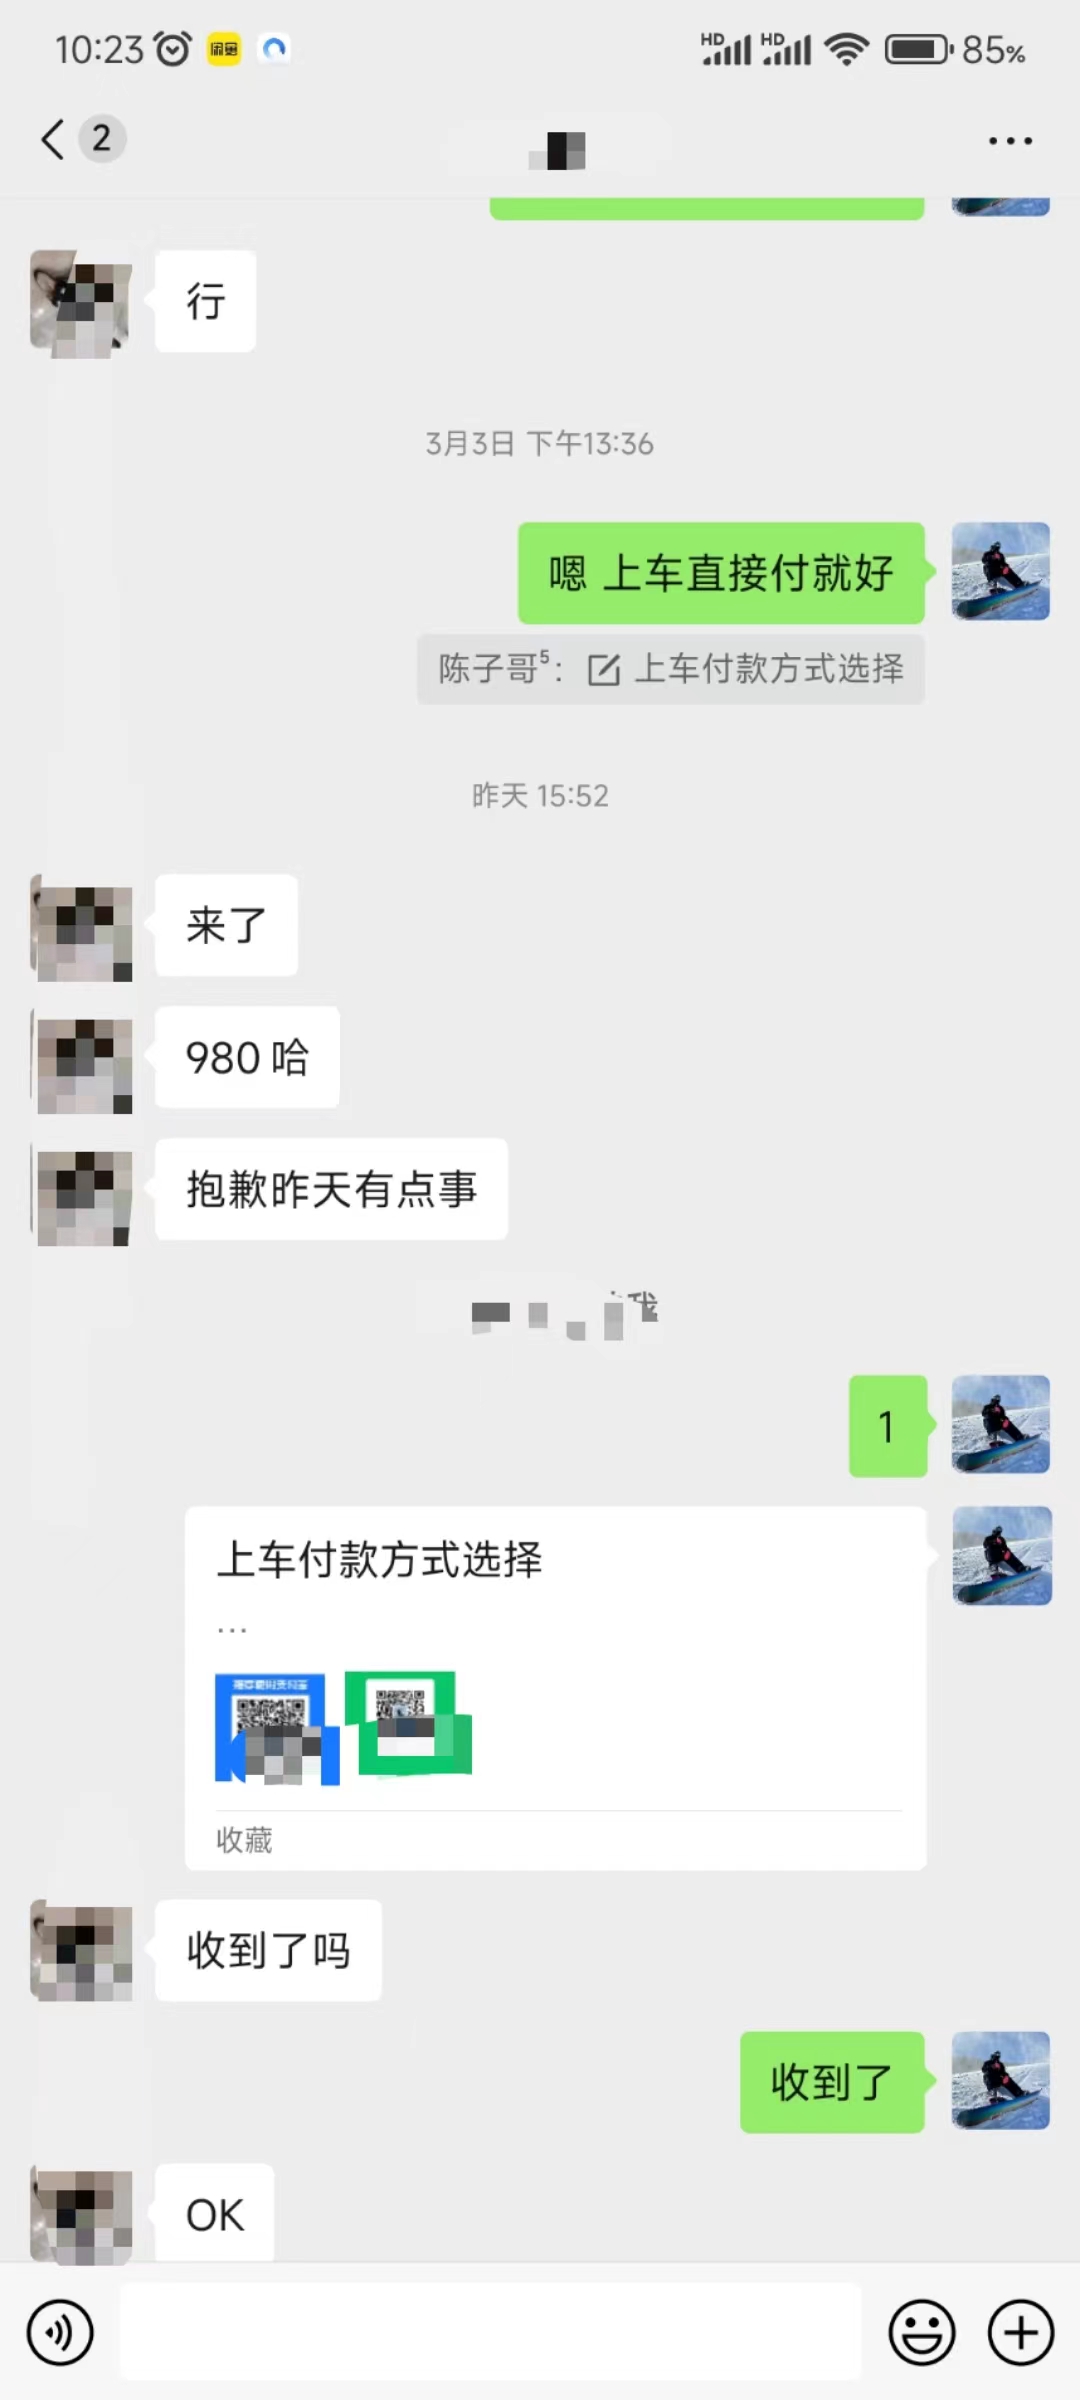 QQ无人直播 新赛道新玩法 一天轻松500+ 腾讯官方流量扶持 文章资源